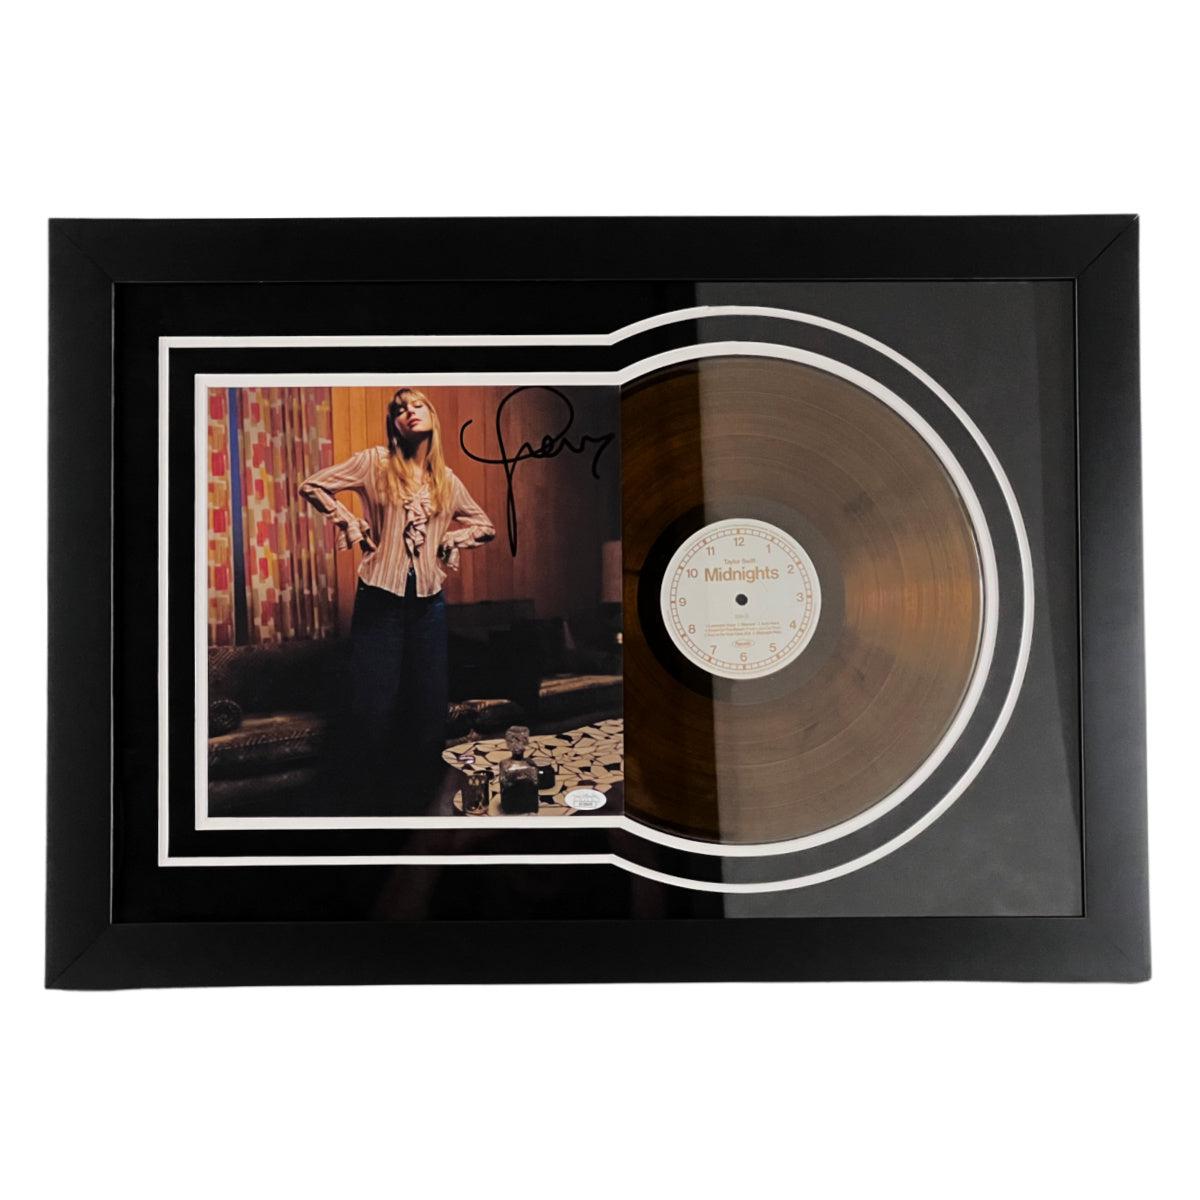 Taylor Swift Signed 12x12 Photo Framed Midnights Vinyl Autographed JSA COA #4